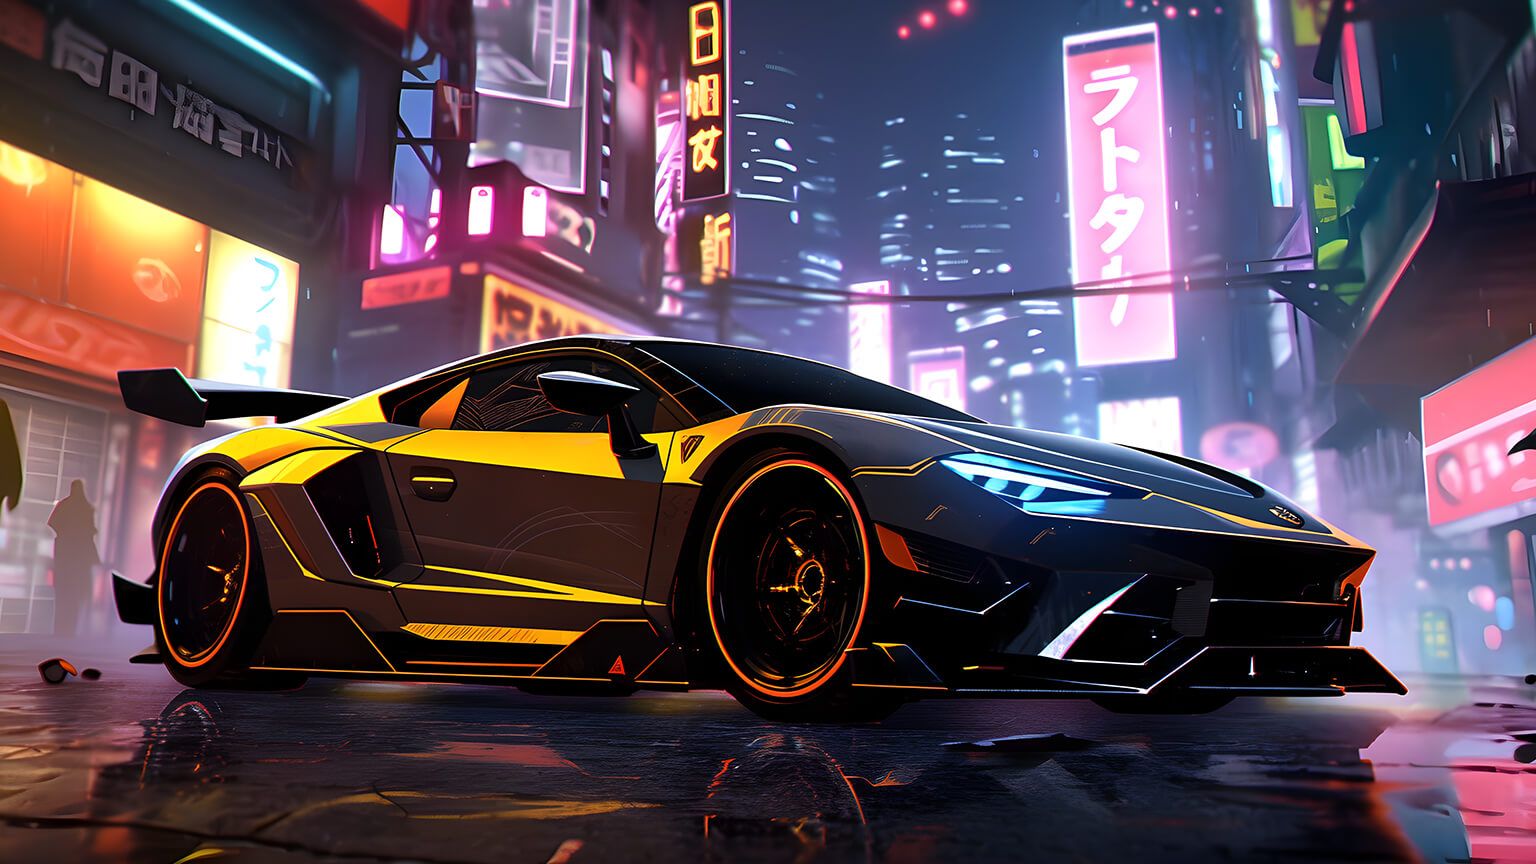  Lamborghini Aventador Hintergrundbild 1536x864. Lamborghini Aventador in Cyberpunk City Desktop Wallpaper in 4K